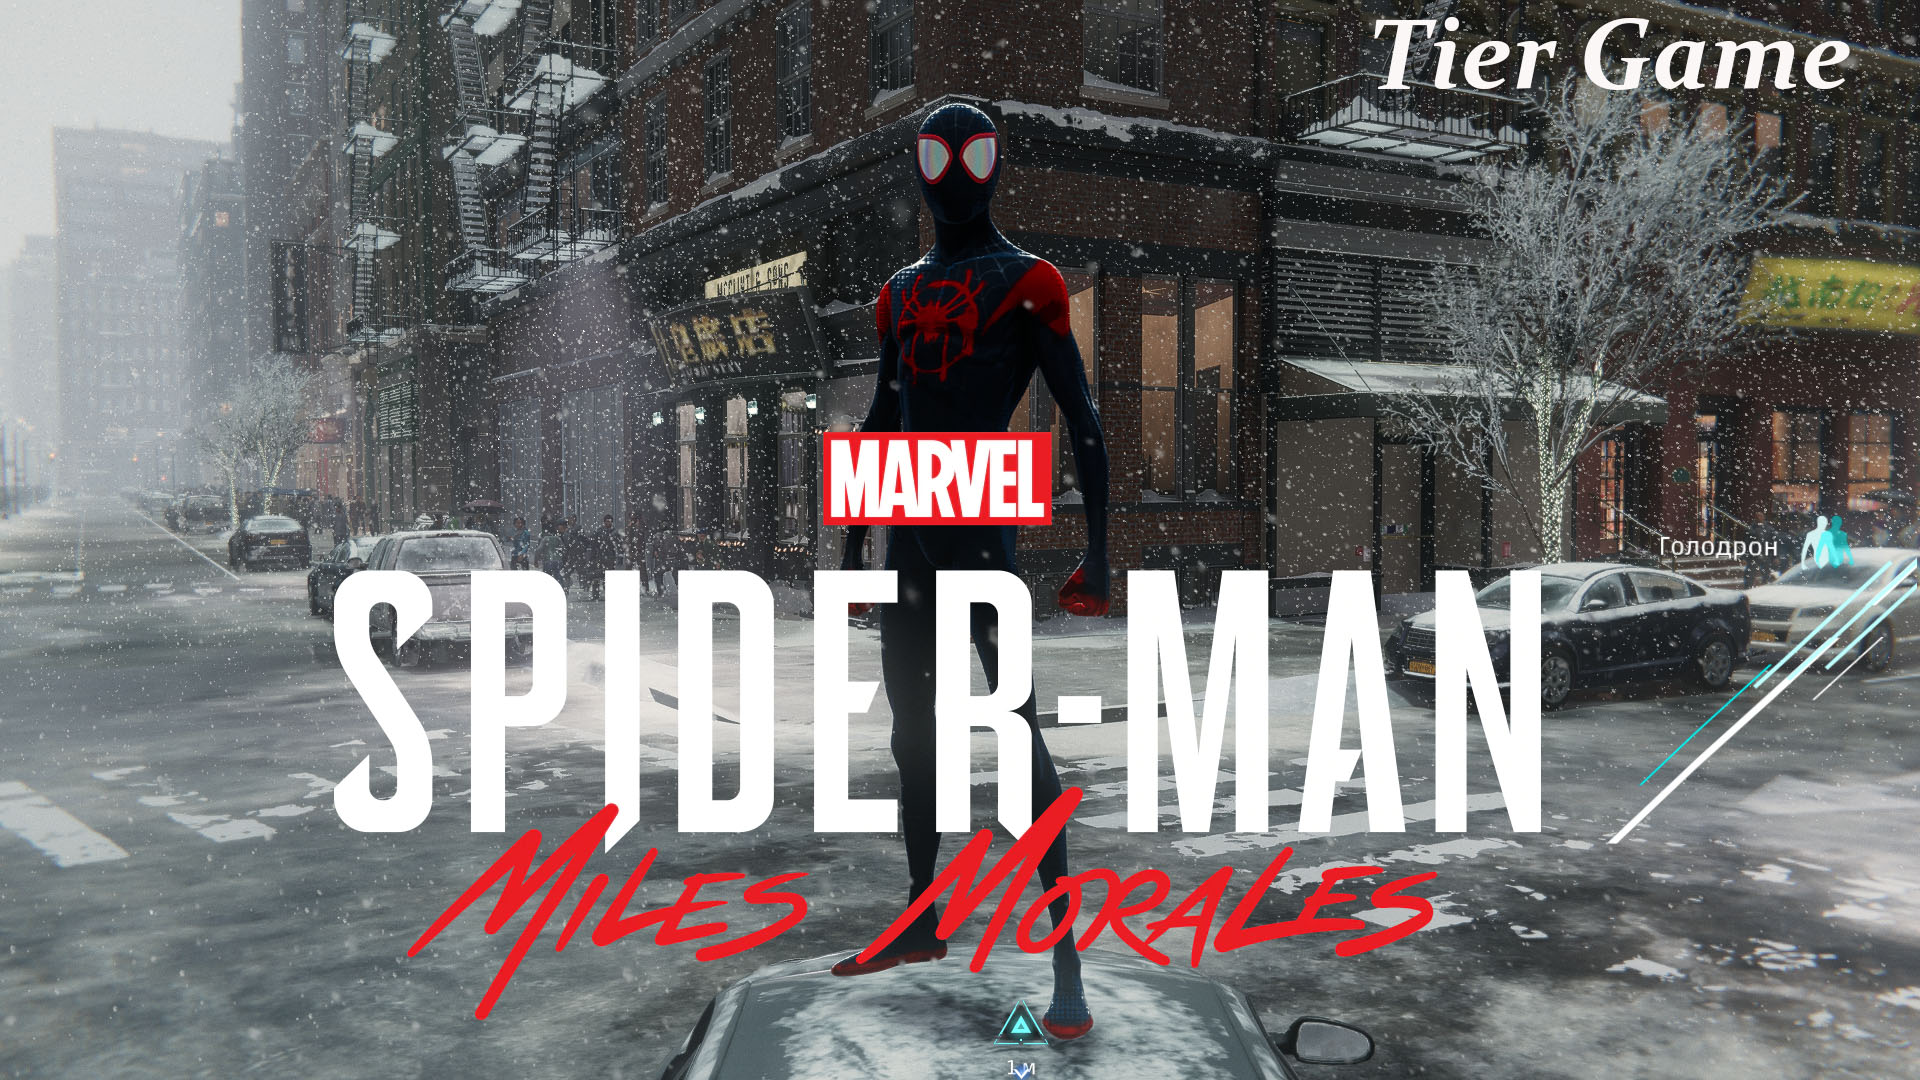 Marvel's Spider-Man: Miles Morales #серия 7